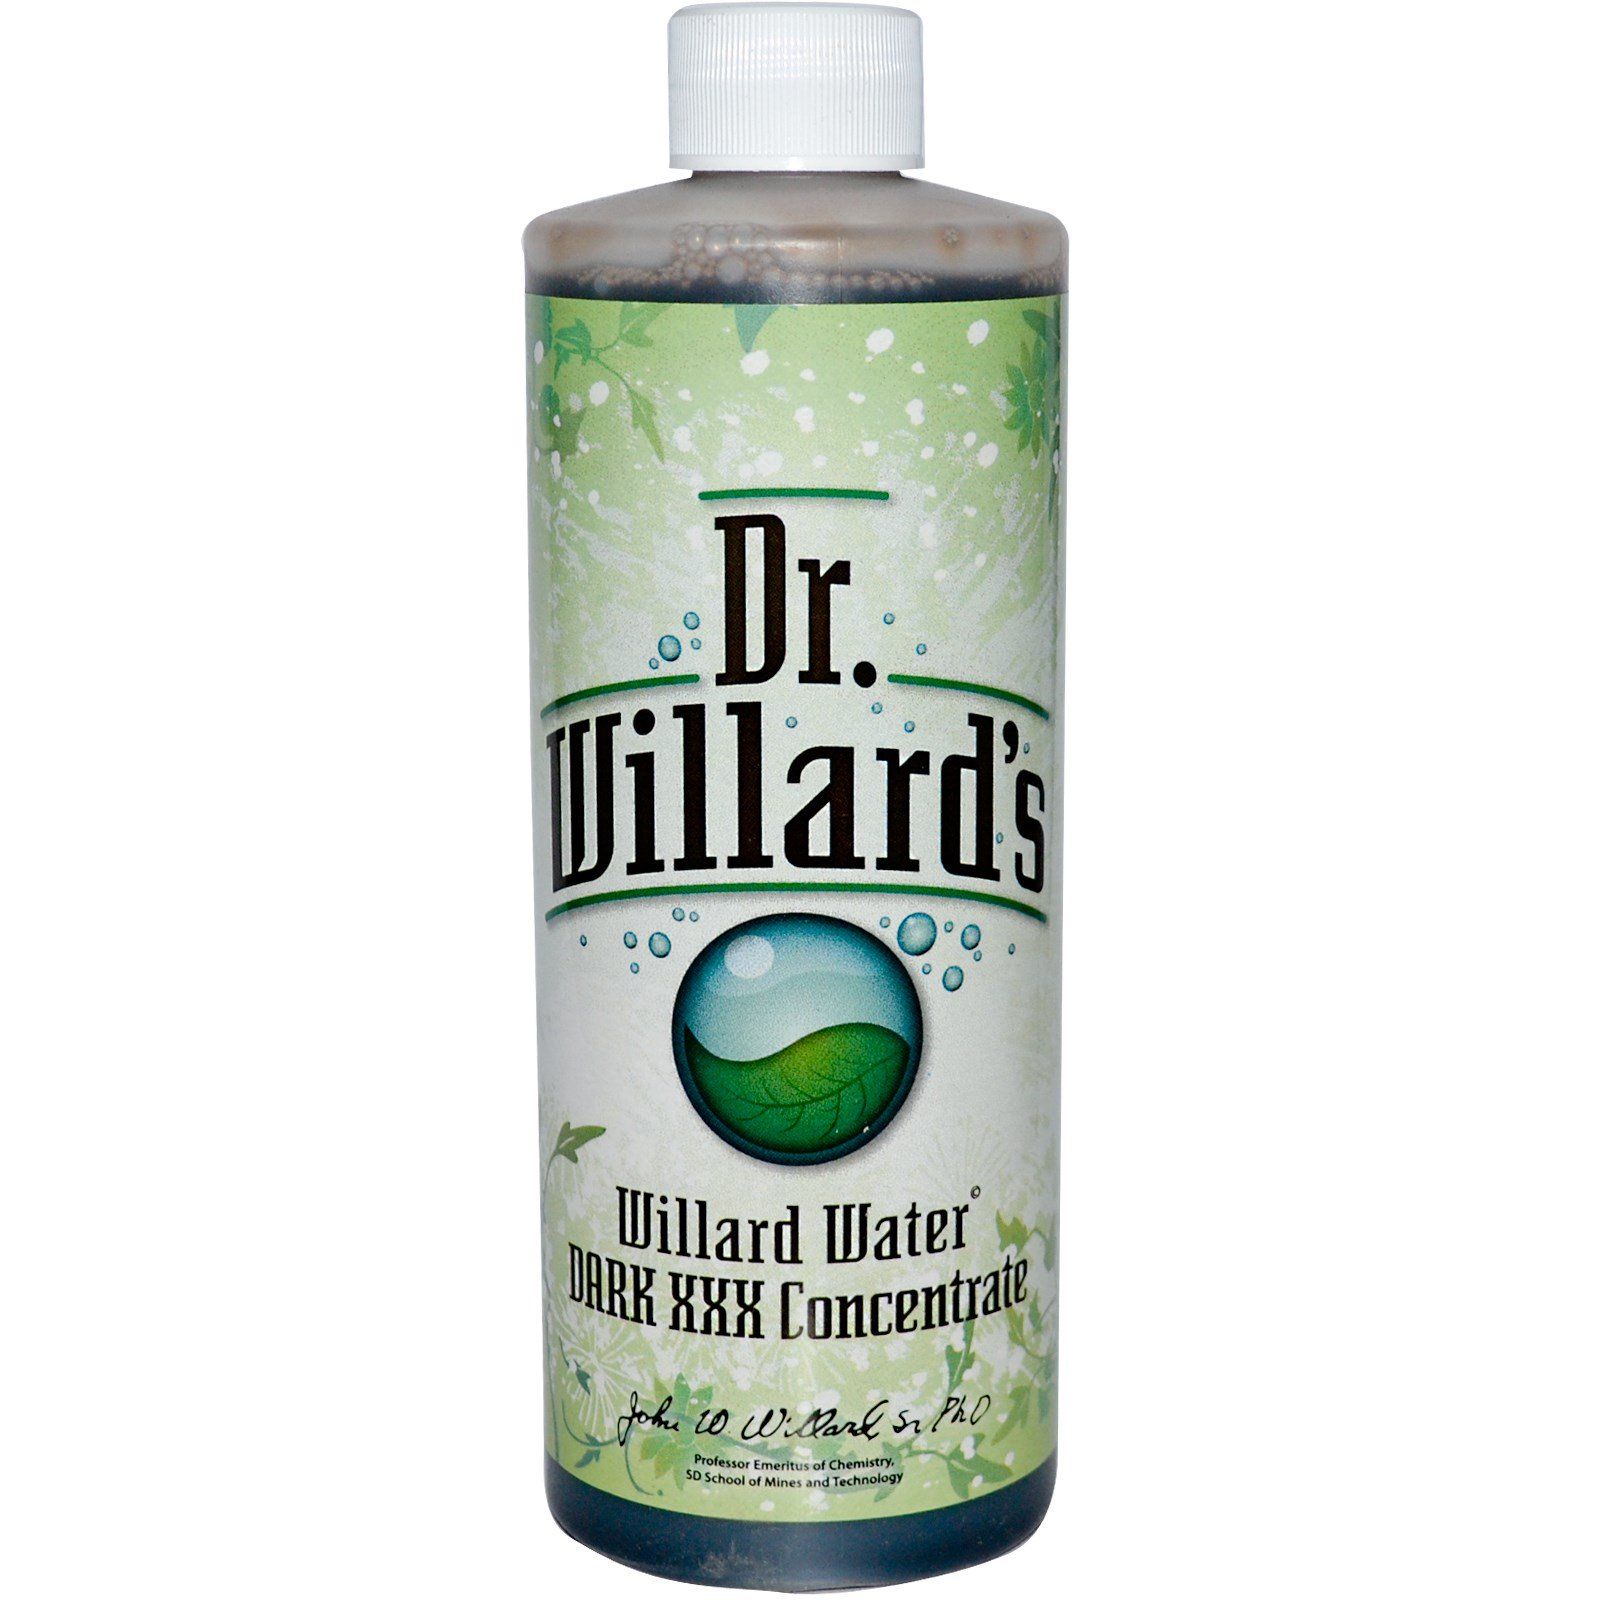 Willard Willard Water темный концентрат XXX 16 унций (0,473 л) verdi falstaff willard white